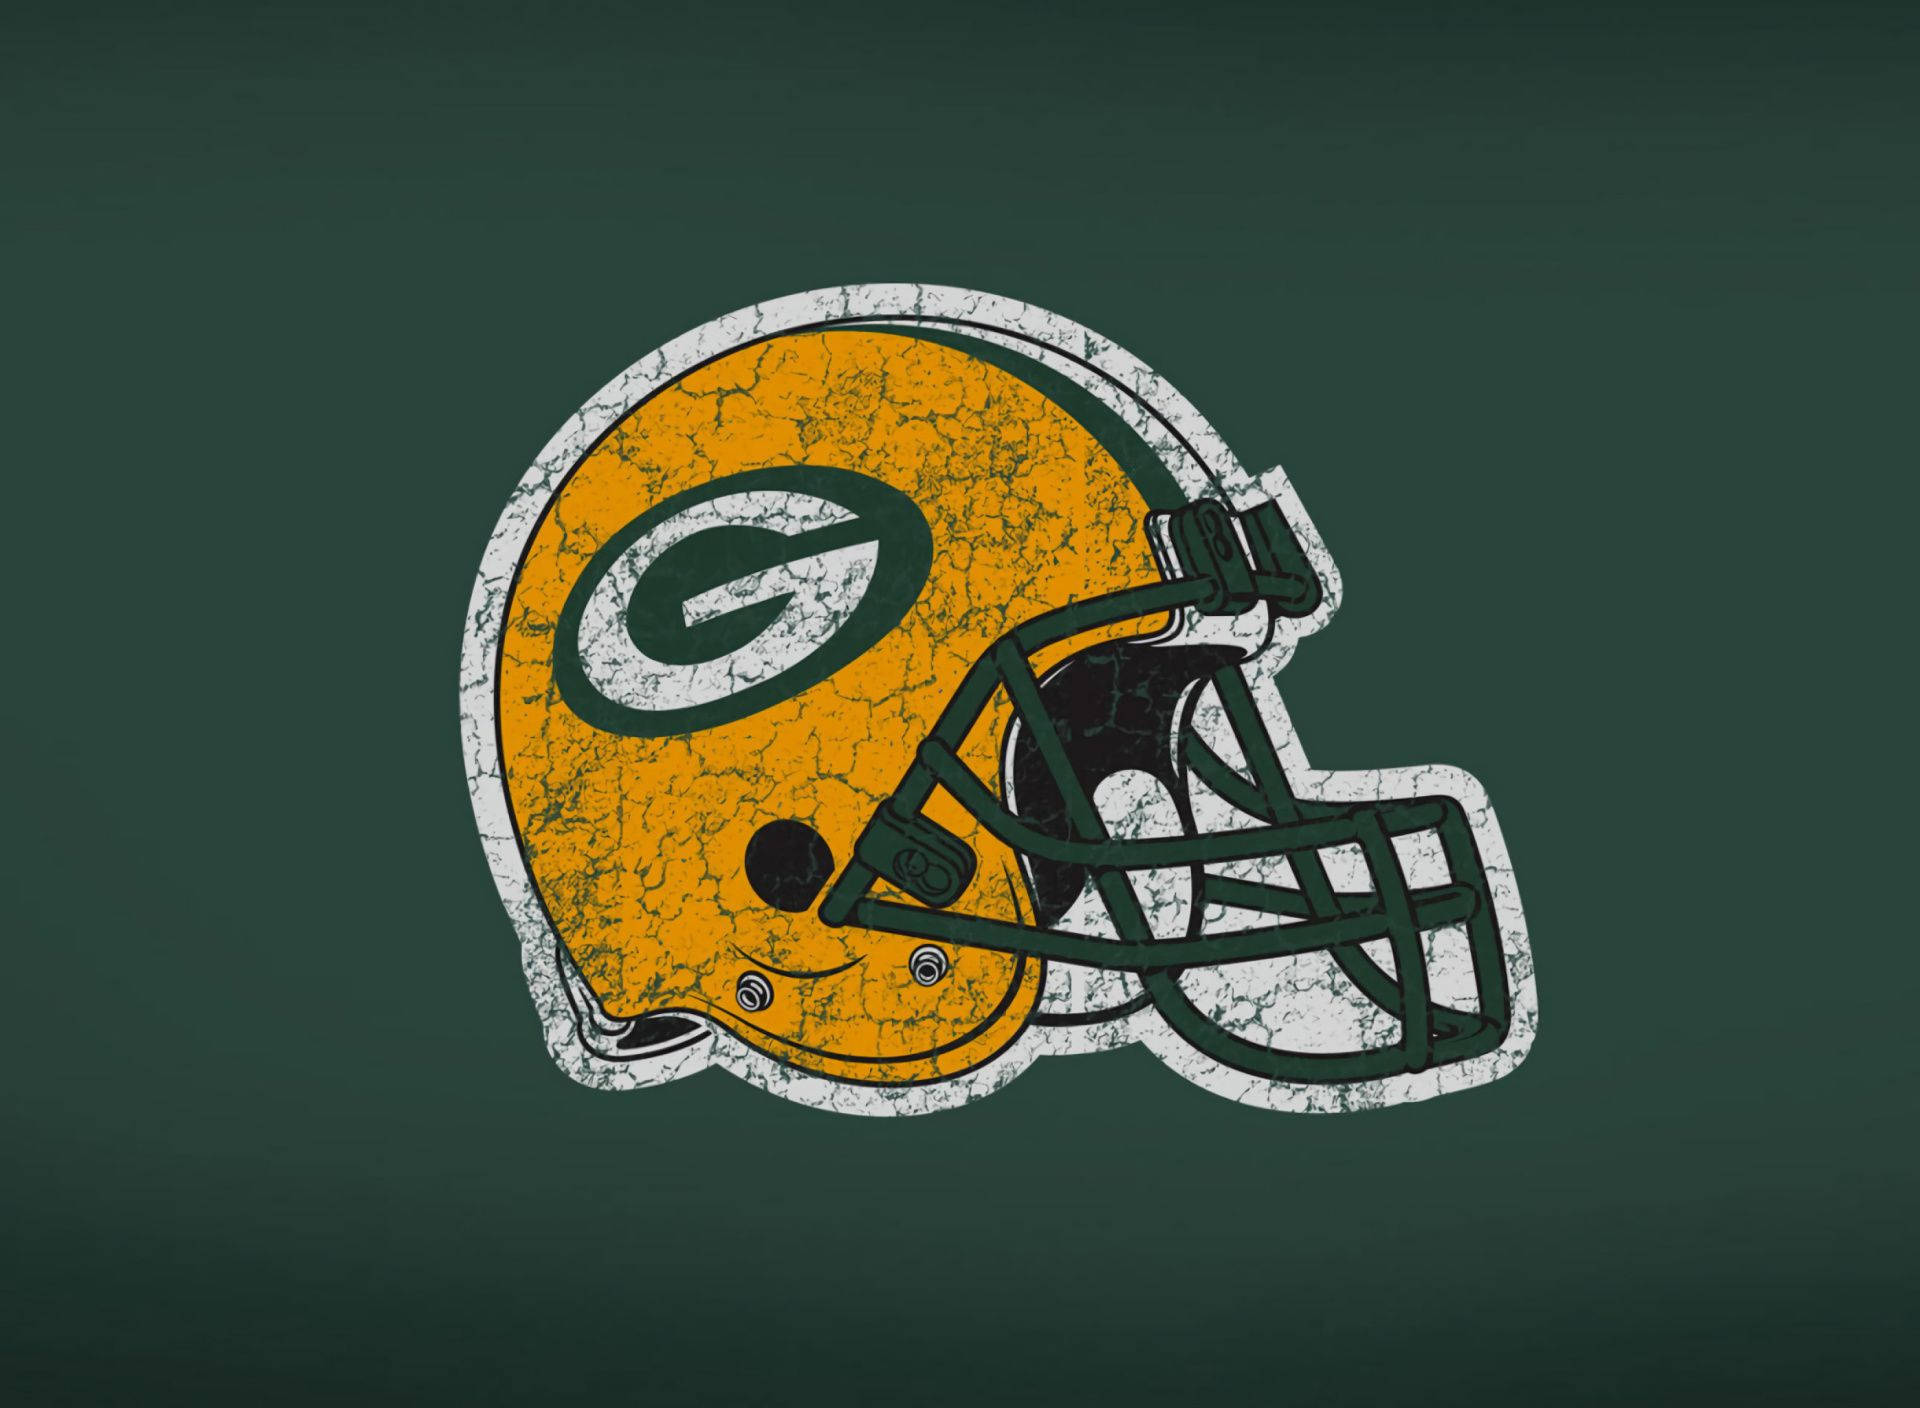 Green Bay Packers Helmet Art Wallpaper